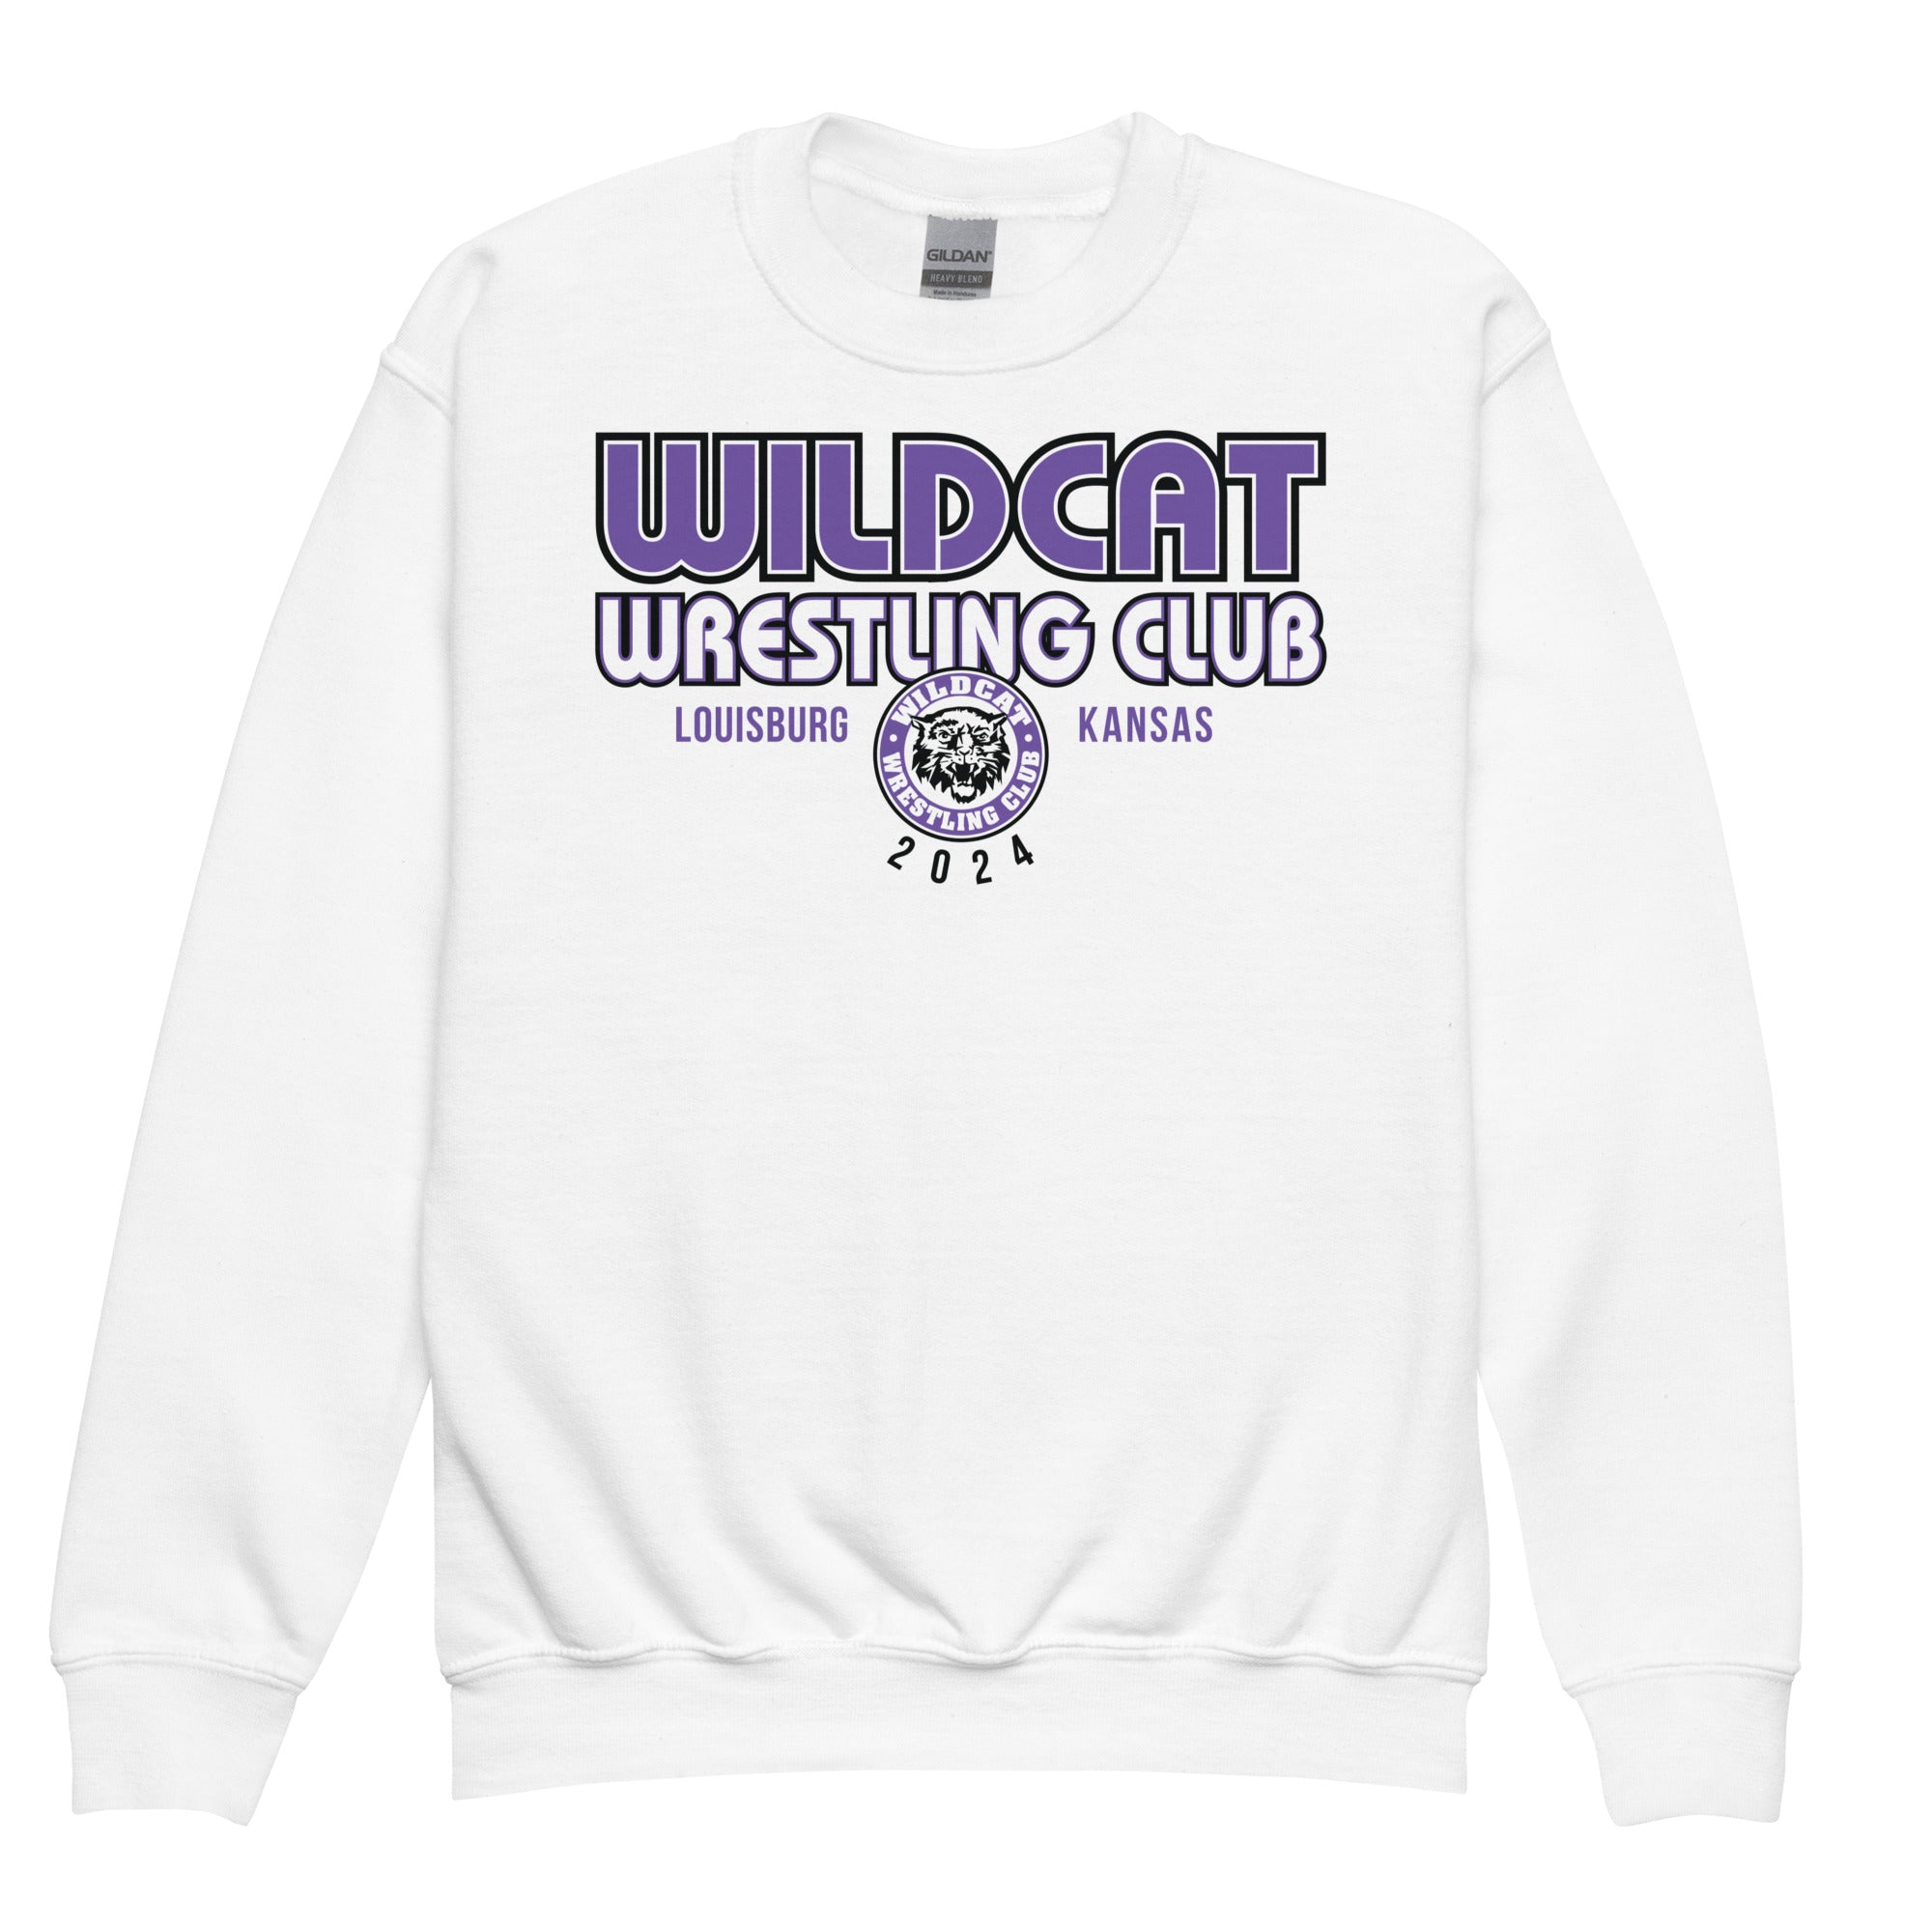 Wildcat Wrestling Club (Louisburg) - Front Design Only - Youth crewneck sweatshirt